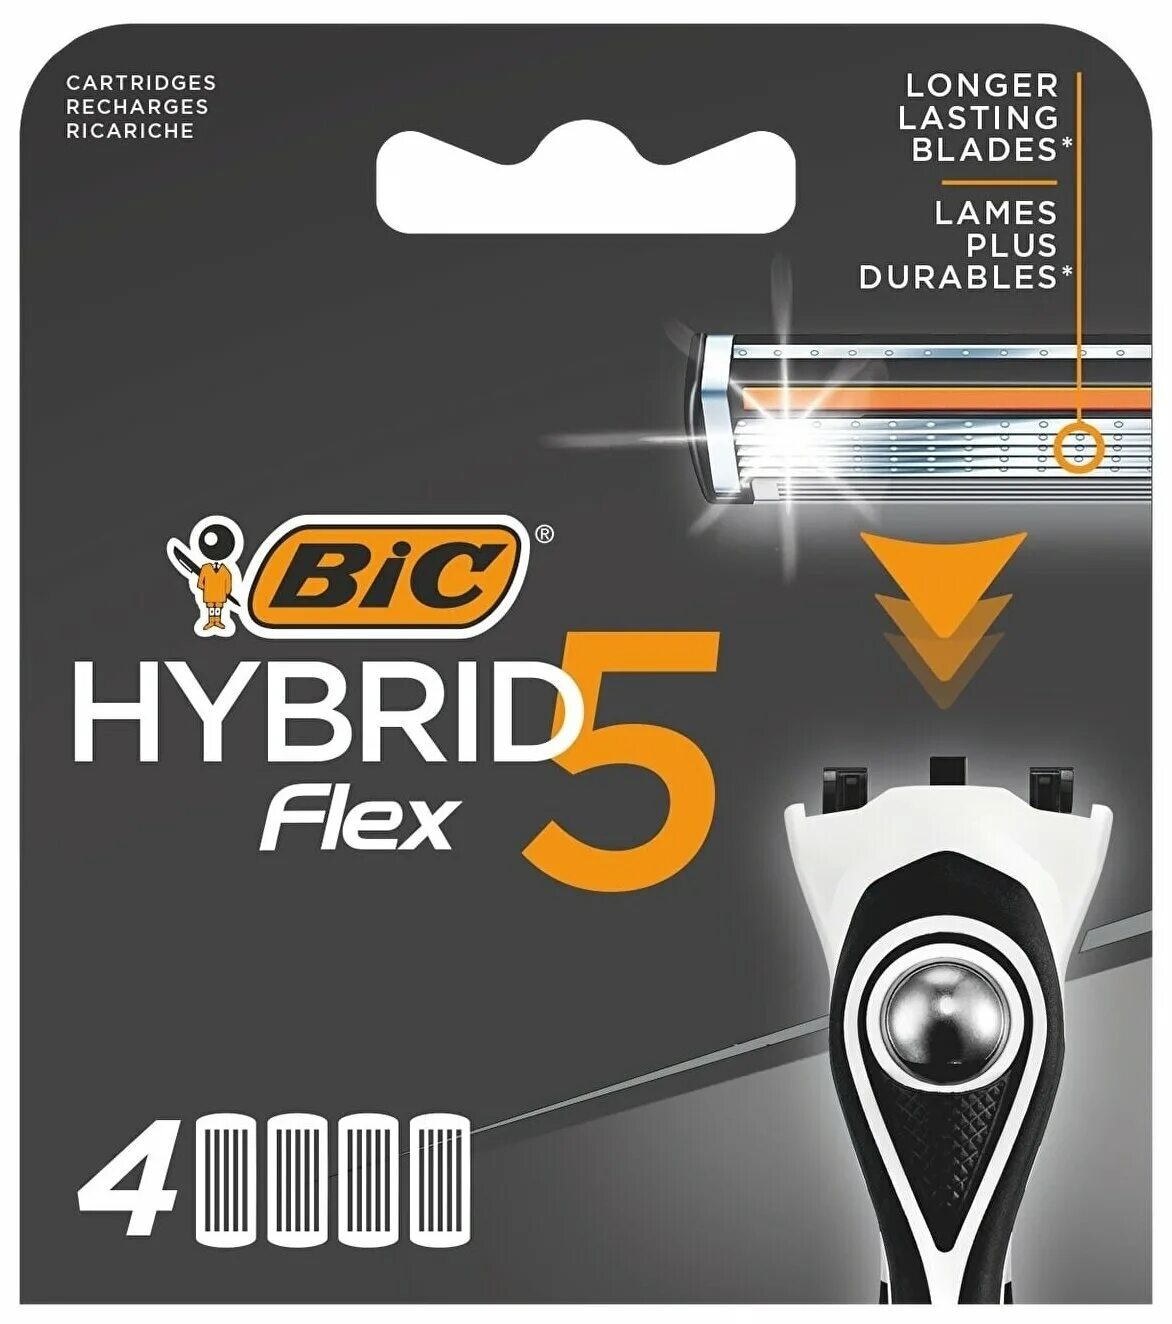 Флекс гибрид. BIC Flex 5 Hybrid кассеты. Бритва BIC Flex 5 Hybrid. BIC Flex 3 Hybrid картриджи для бритвы. Сменные лнзвия для бритвы Биг Флекс.